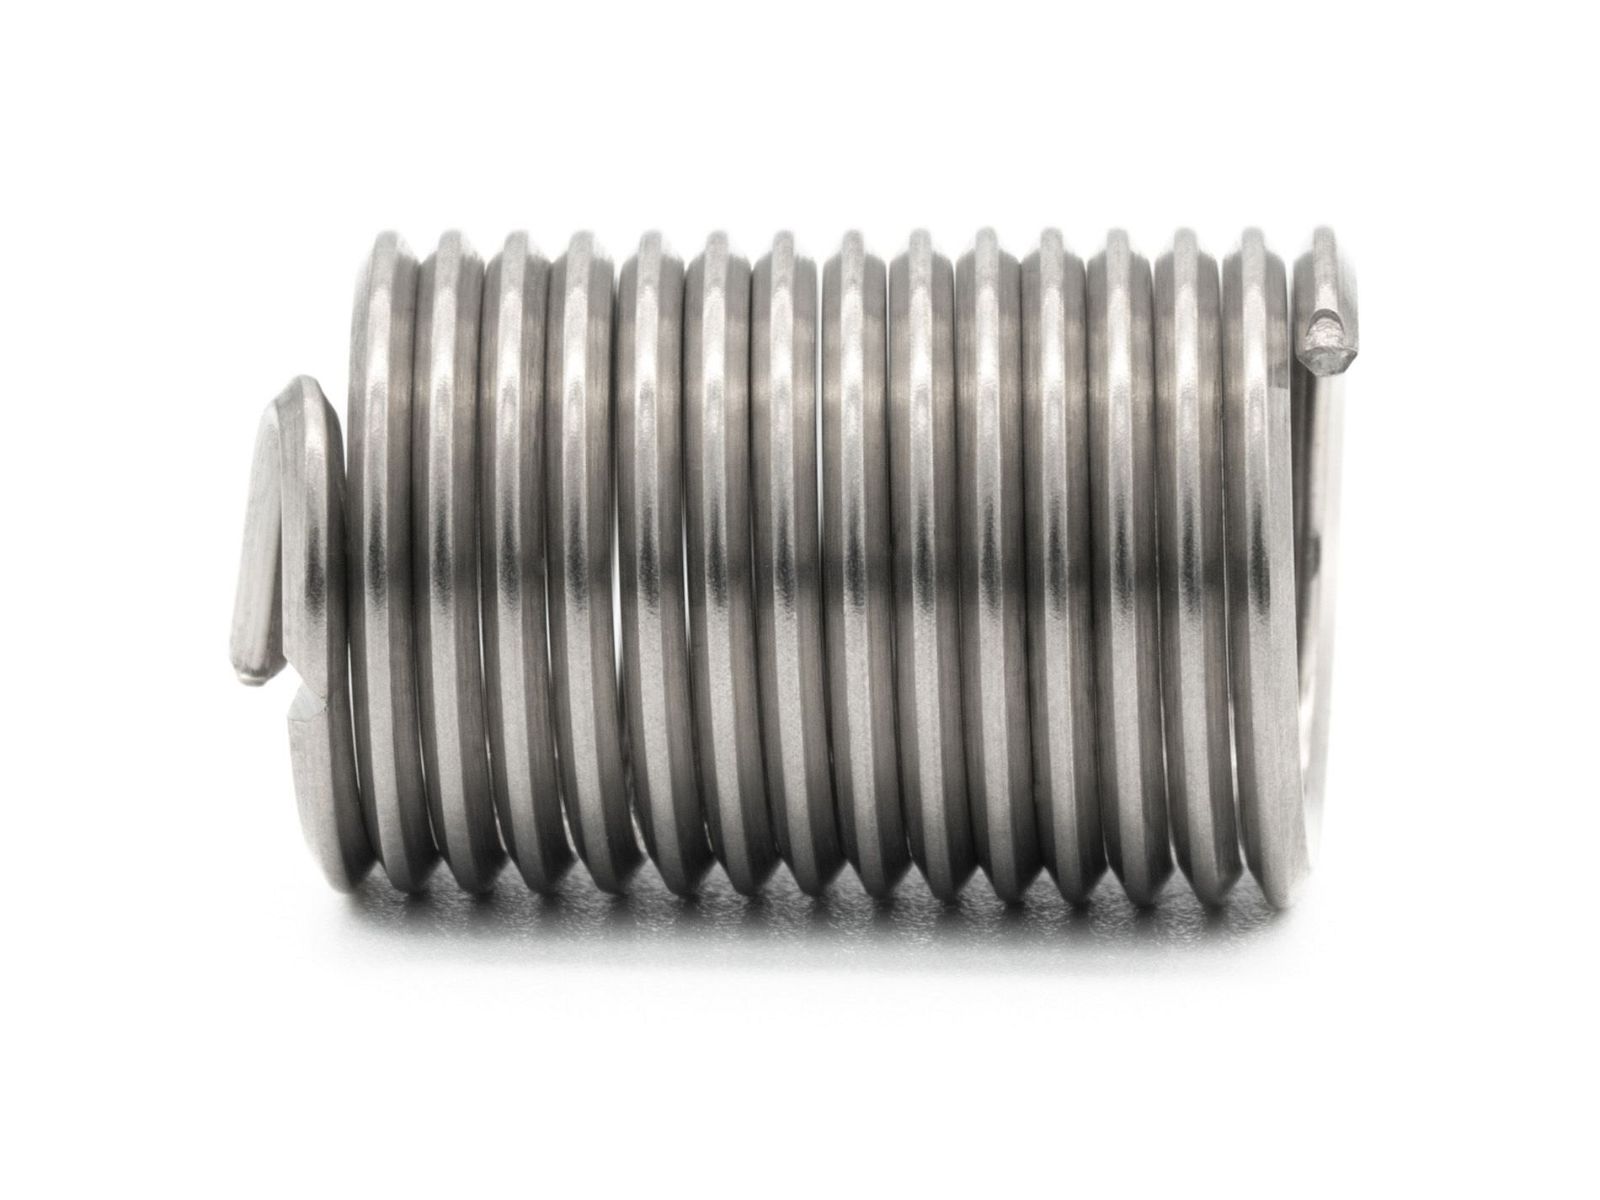 BaerCoil Wire Thread Inserts BSW 3/16 x 24 - 2.5 D (11.91 mm) - free running - 100 pcs.